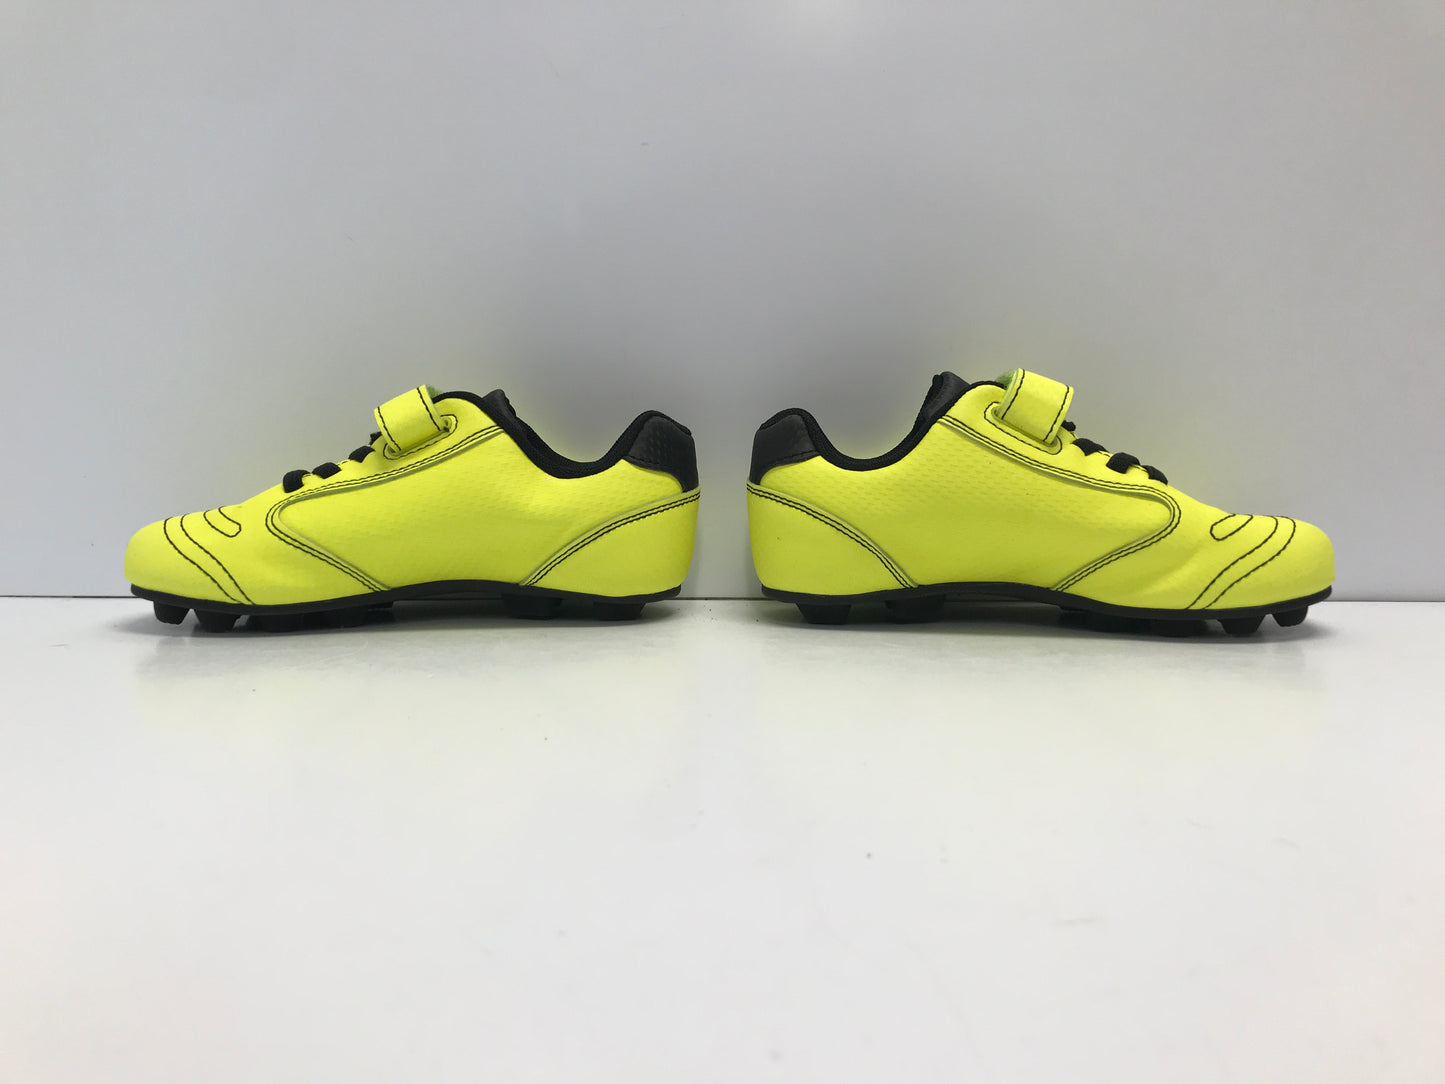 Soccer Shoes Cleats Child Size 12 Athletic Lime Black Excellent